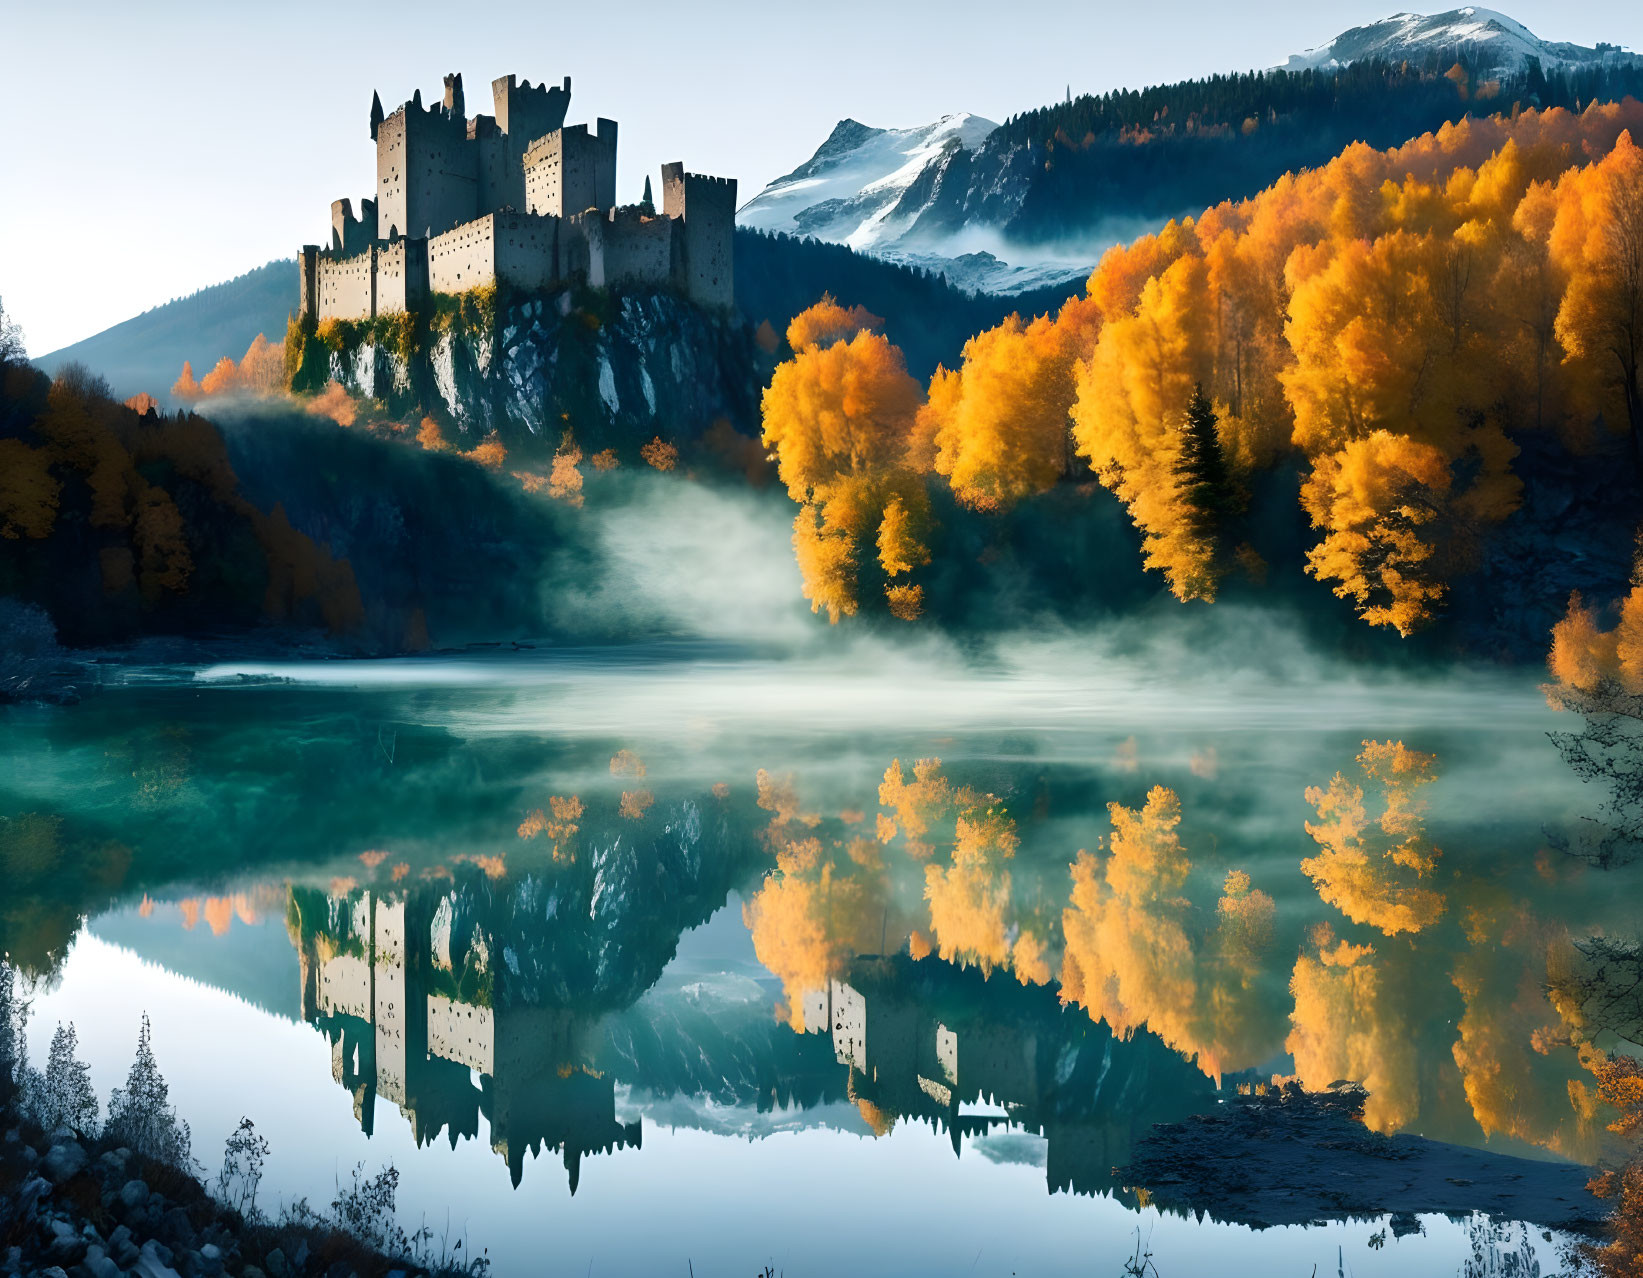 Majestic castle overlooking misty lake in autumn landscape